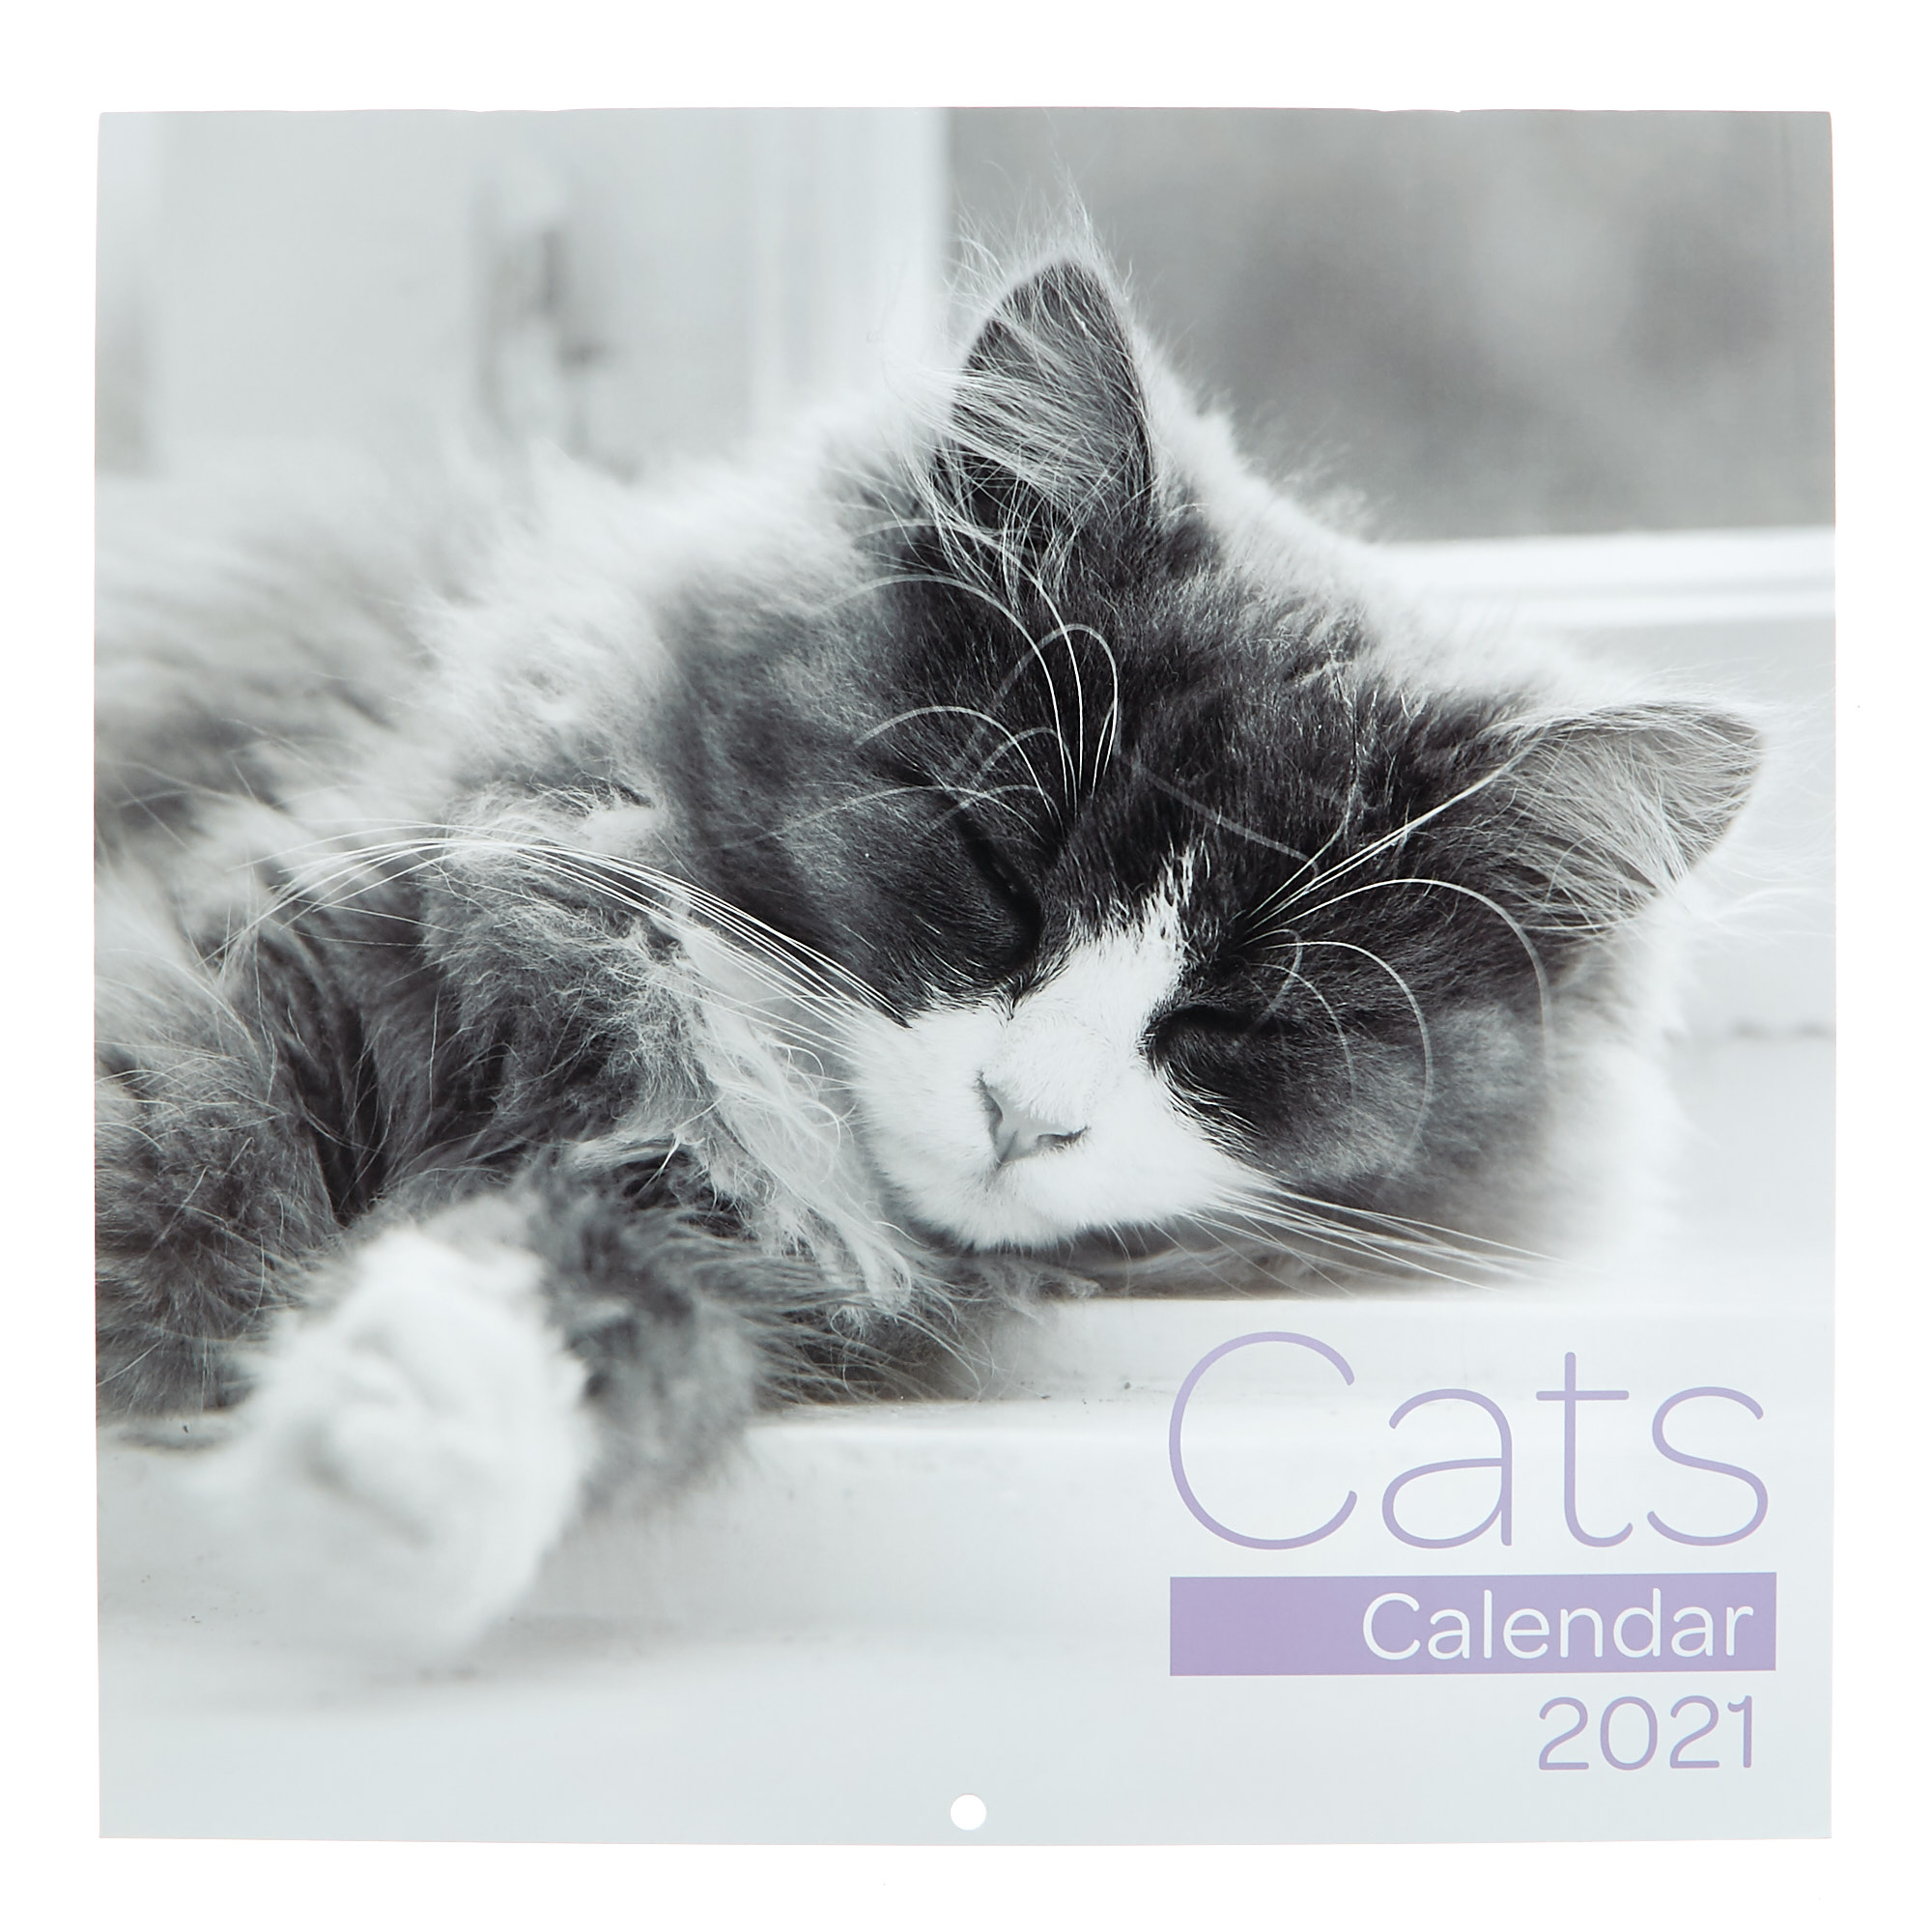 Cats 2021 Calendar